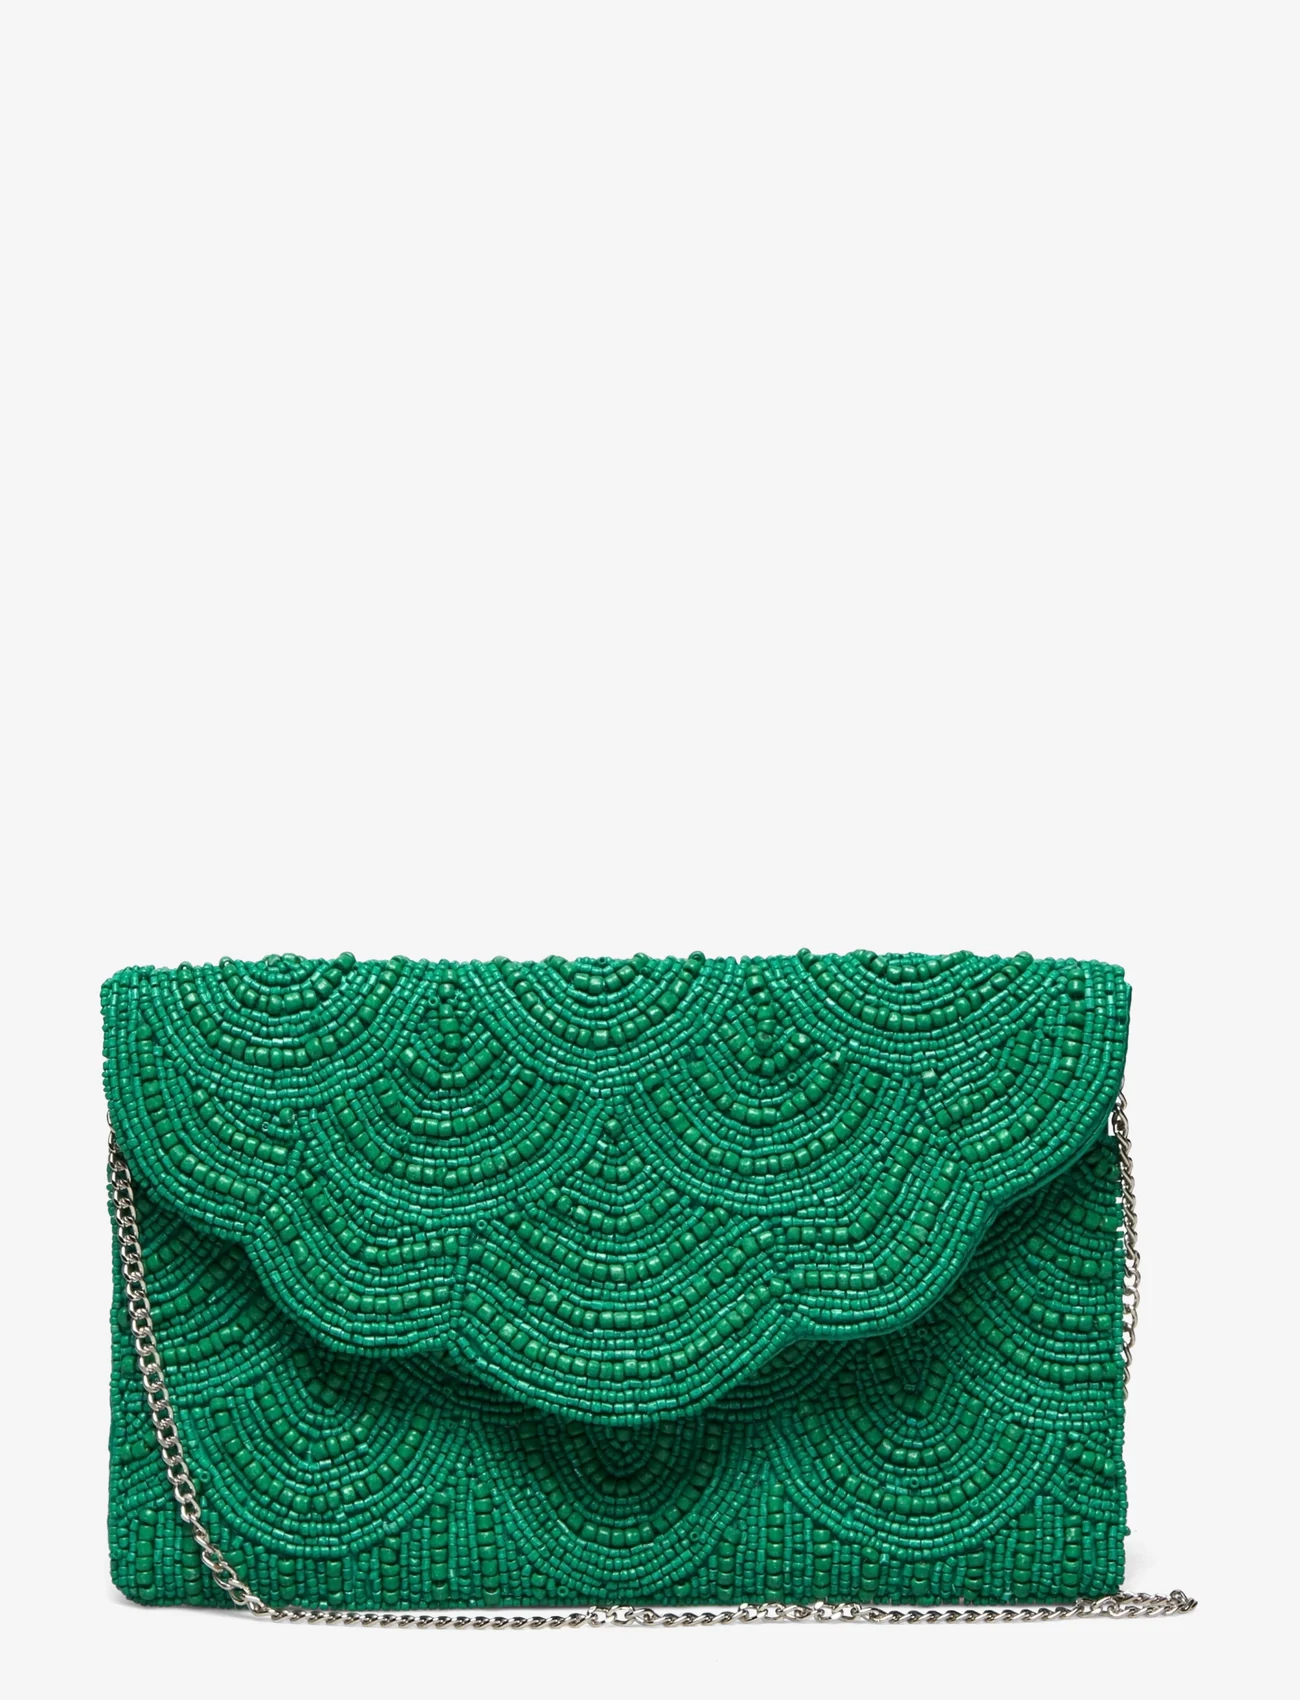 Pipol's Bazaar - Casablanca Green Clutch Bag - festmode zu outlet-preisen - green - 0